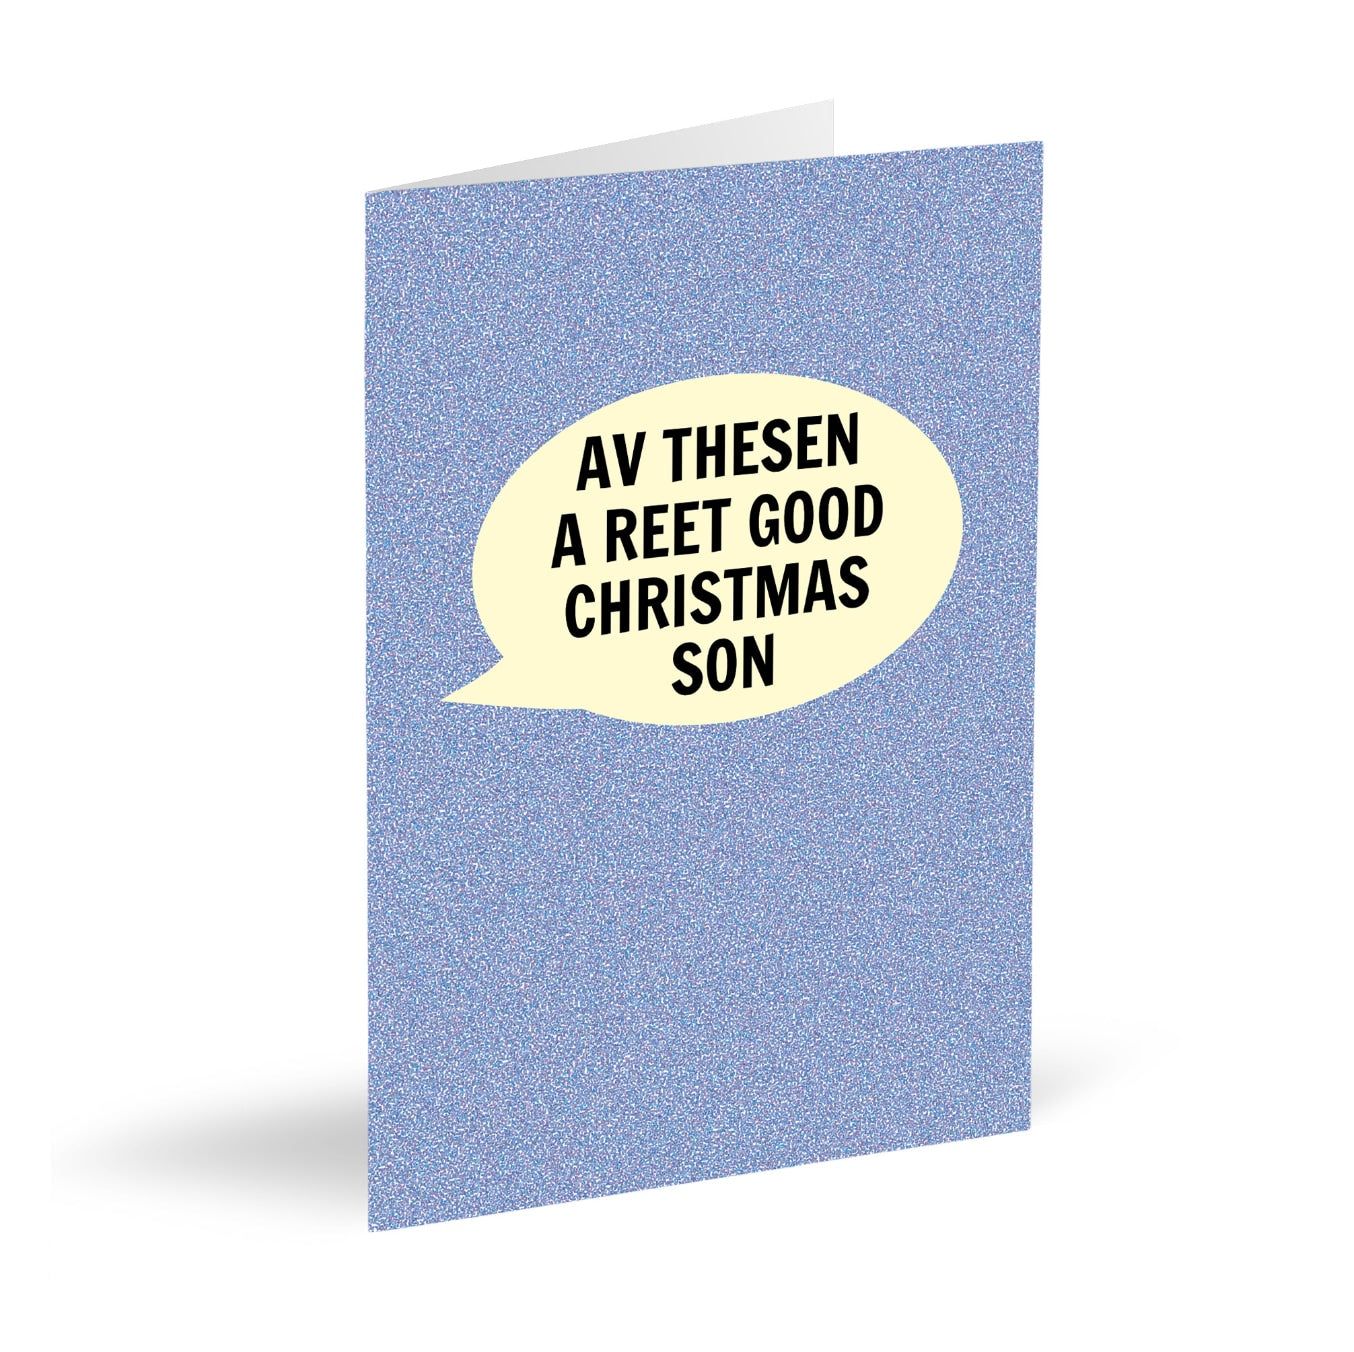 Av Thesen A Reet Good Christmas Son Card - The Great Yorkshire Shop